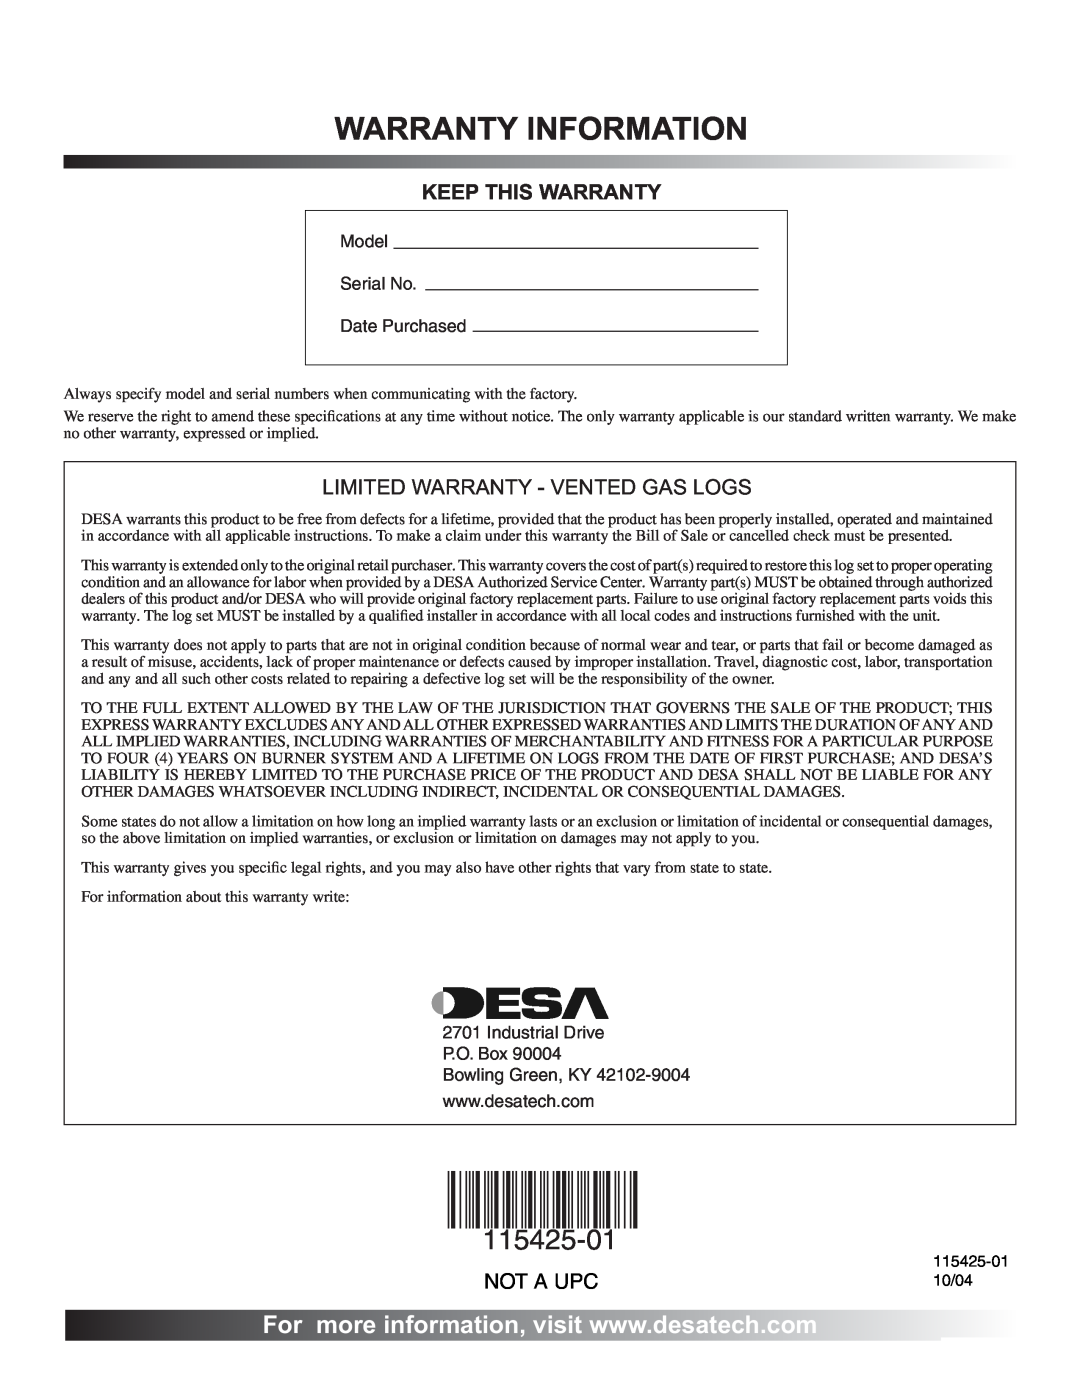 Desa PHK-18, PHK-24, PHK-30 Warranty Information, Not A Upc, 115425-01, Limited Warranty - Vented Gas Logs 